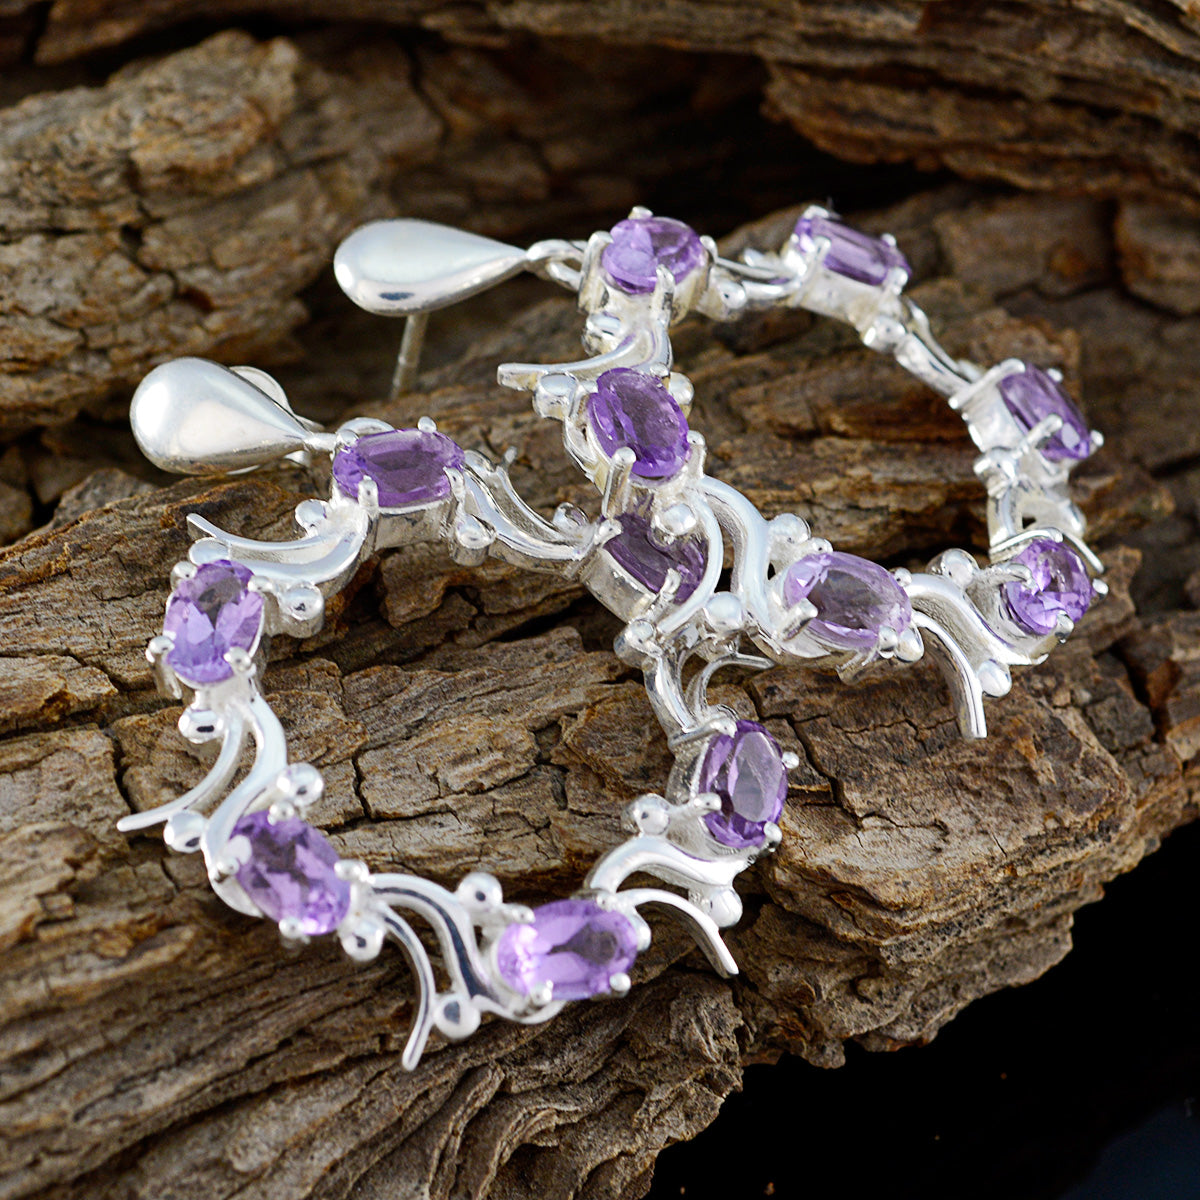 Riyo Genuine Gems oval Faceted Purple Amethyst Silver Earring anniversary day gift